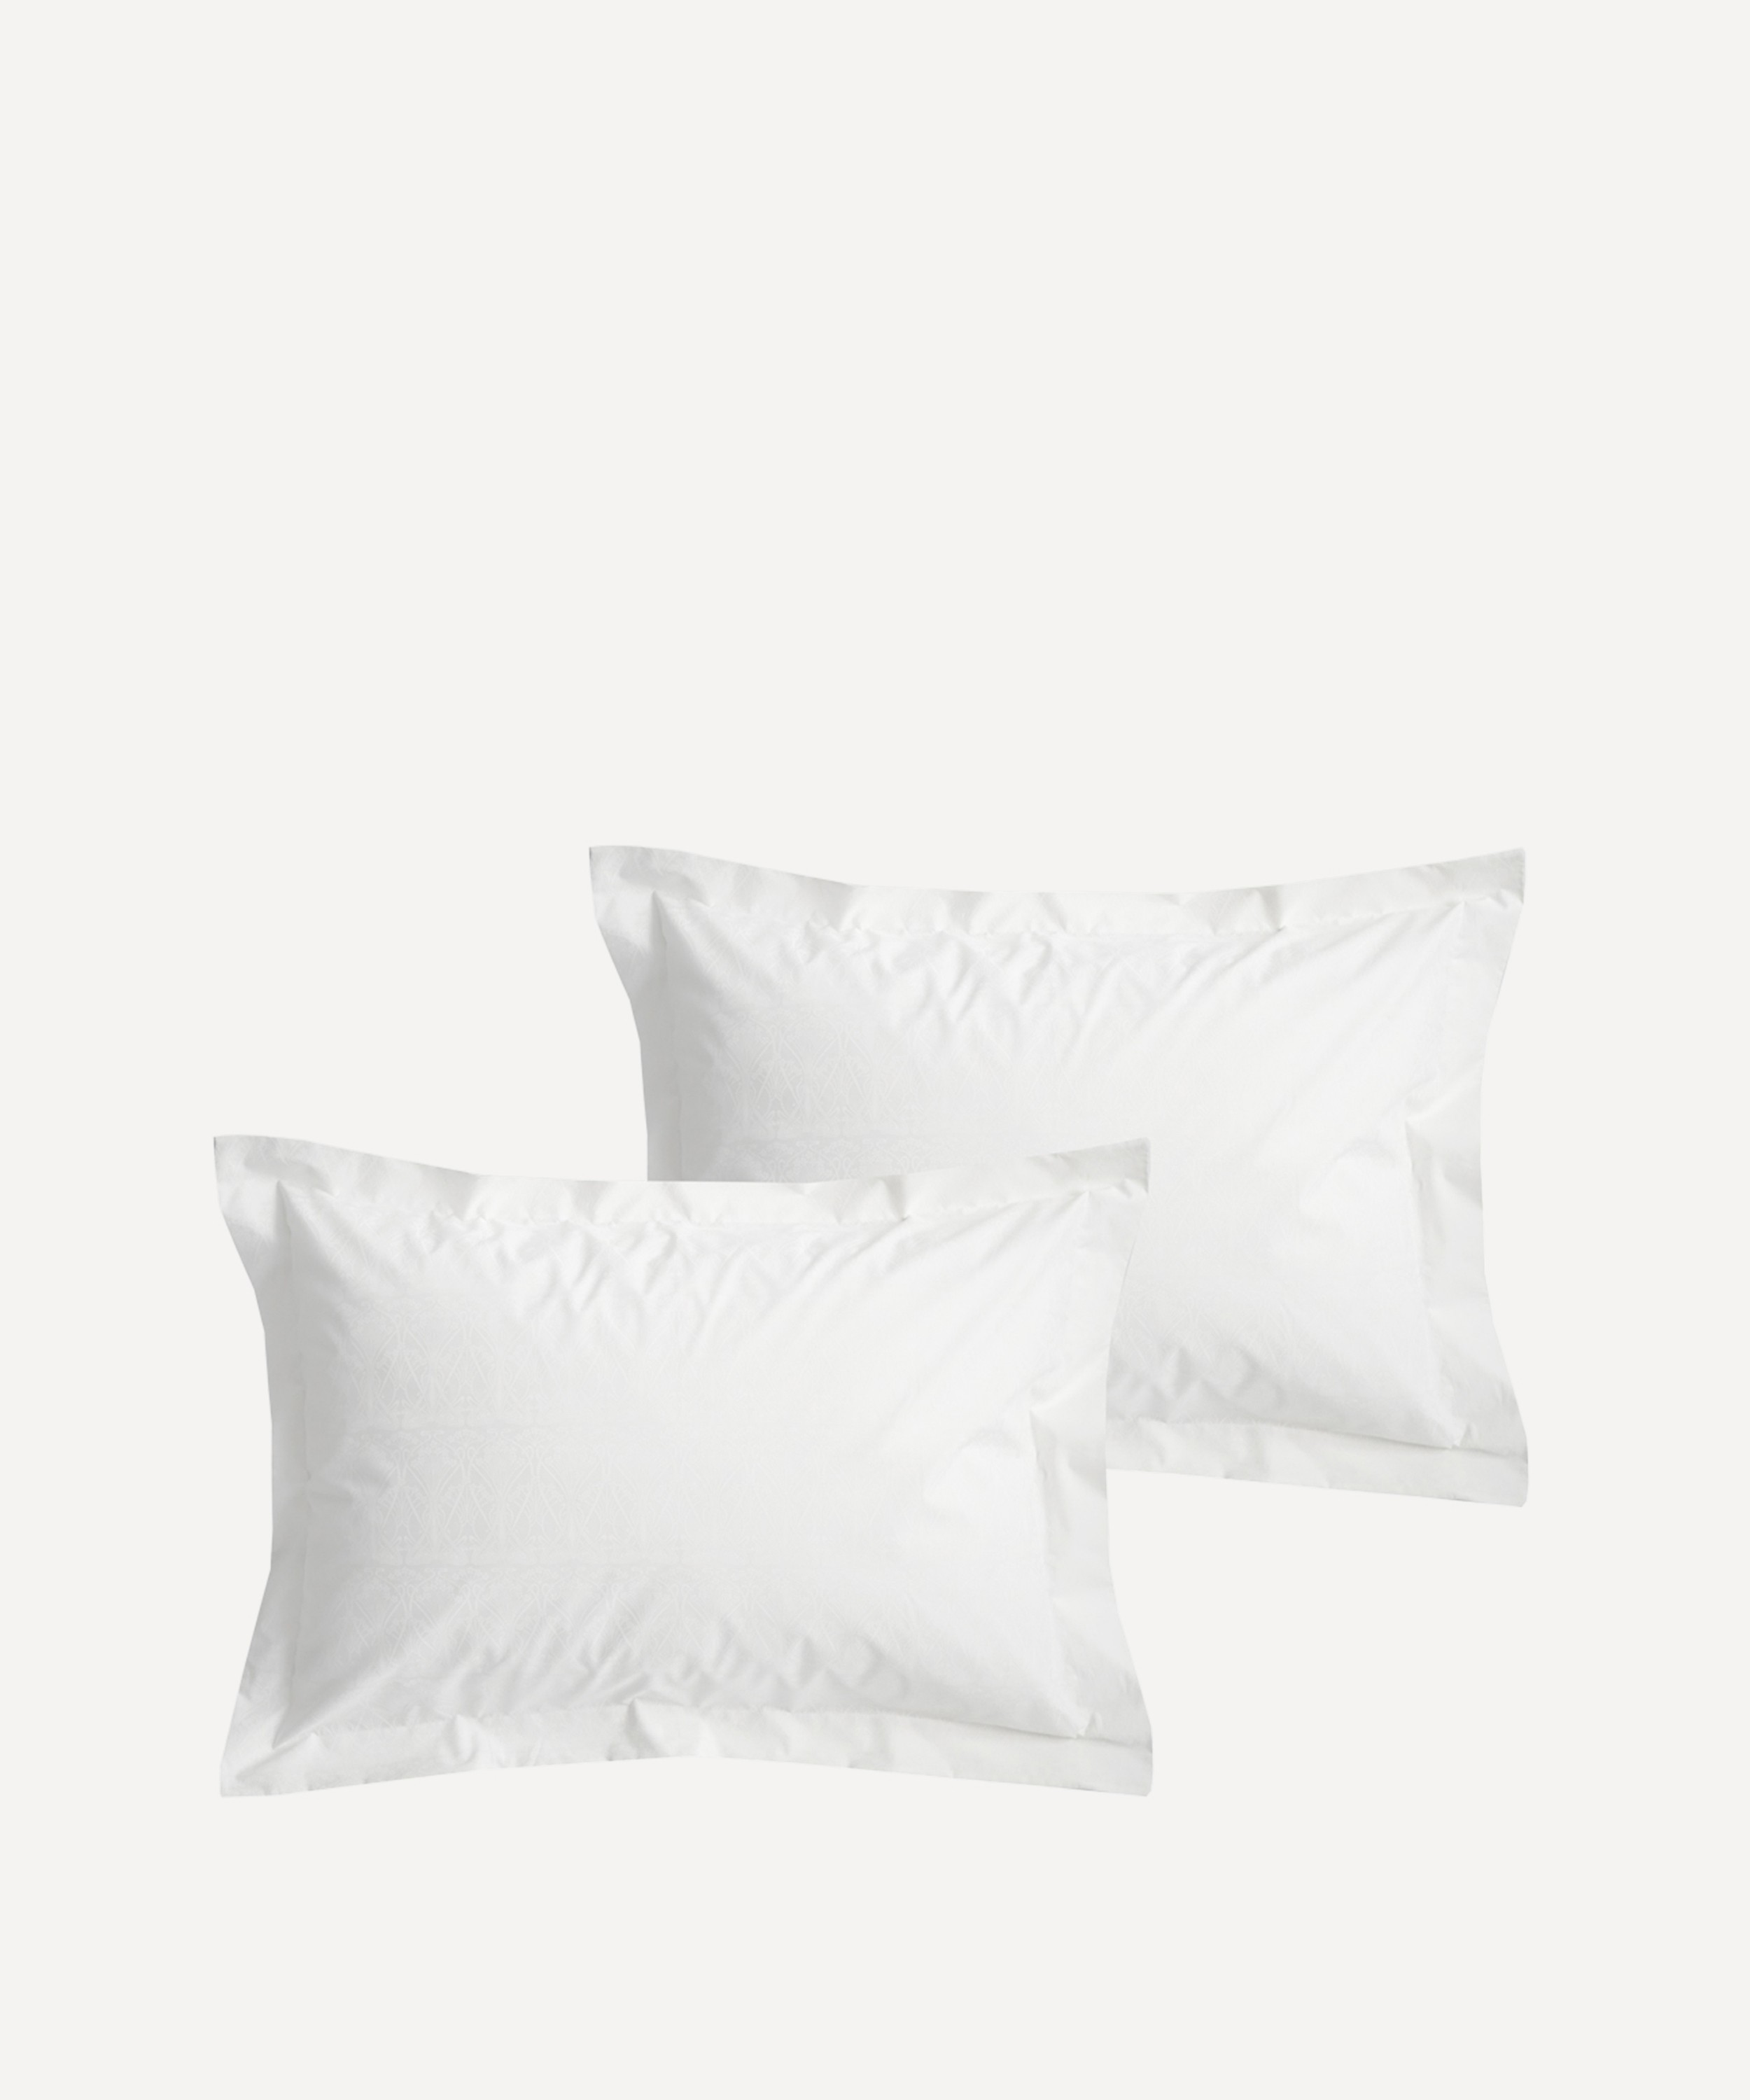 Coco & Wolf - Ianthe White Oxford Pillowcases Set of Two